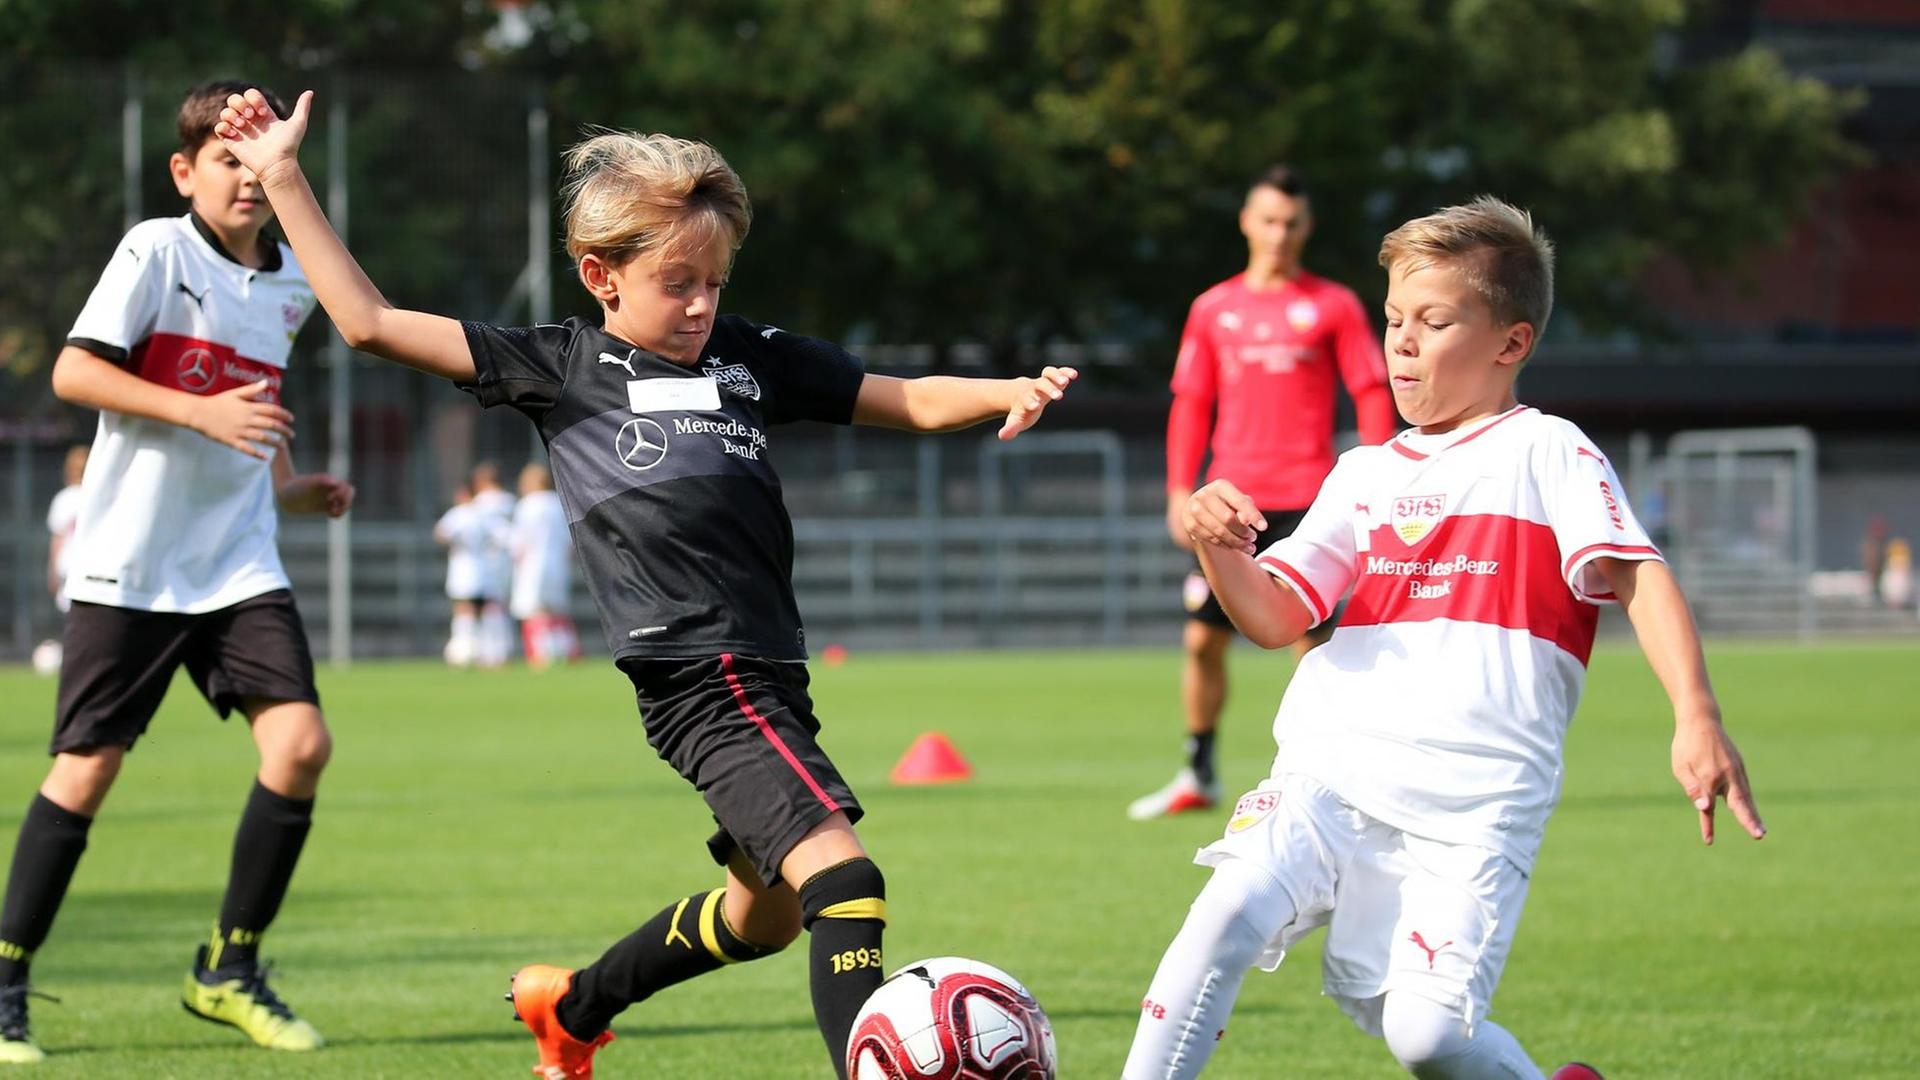 Kinder-Fußballtraining beim VfB Stuttgart.